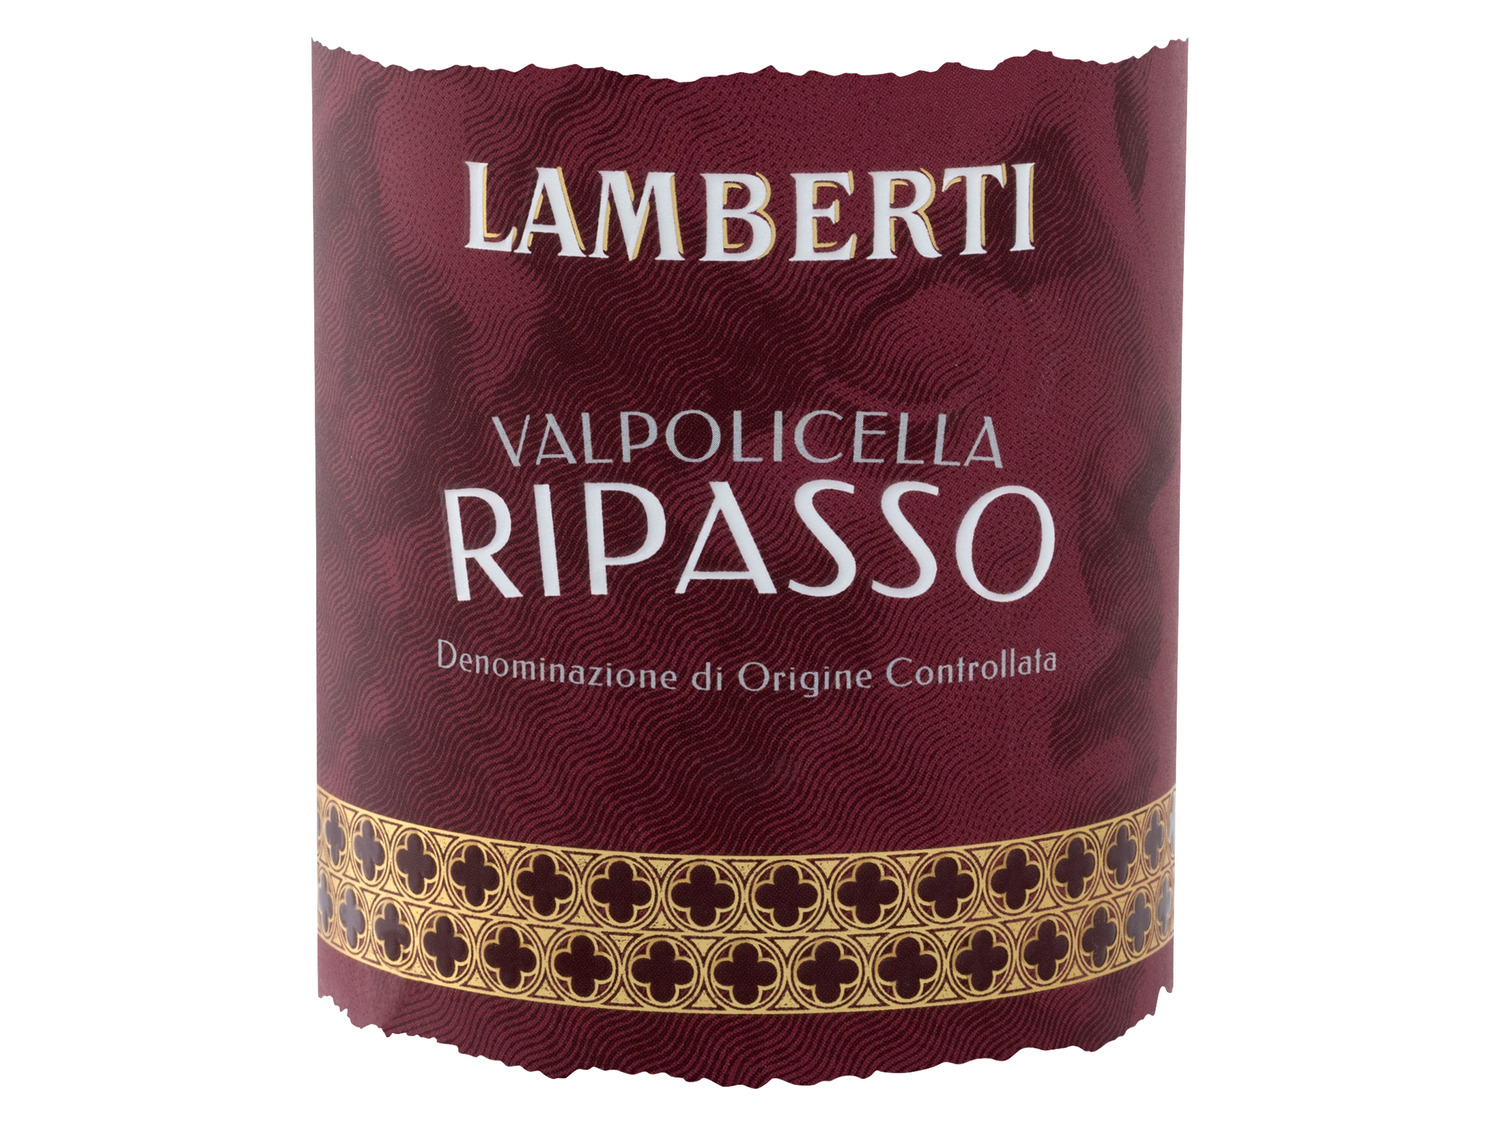 Lamberti Rotwein trocken, Ripasso 2019 Valpolicella DOC